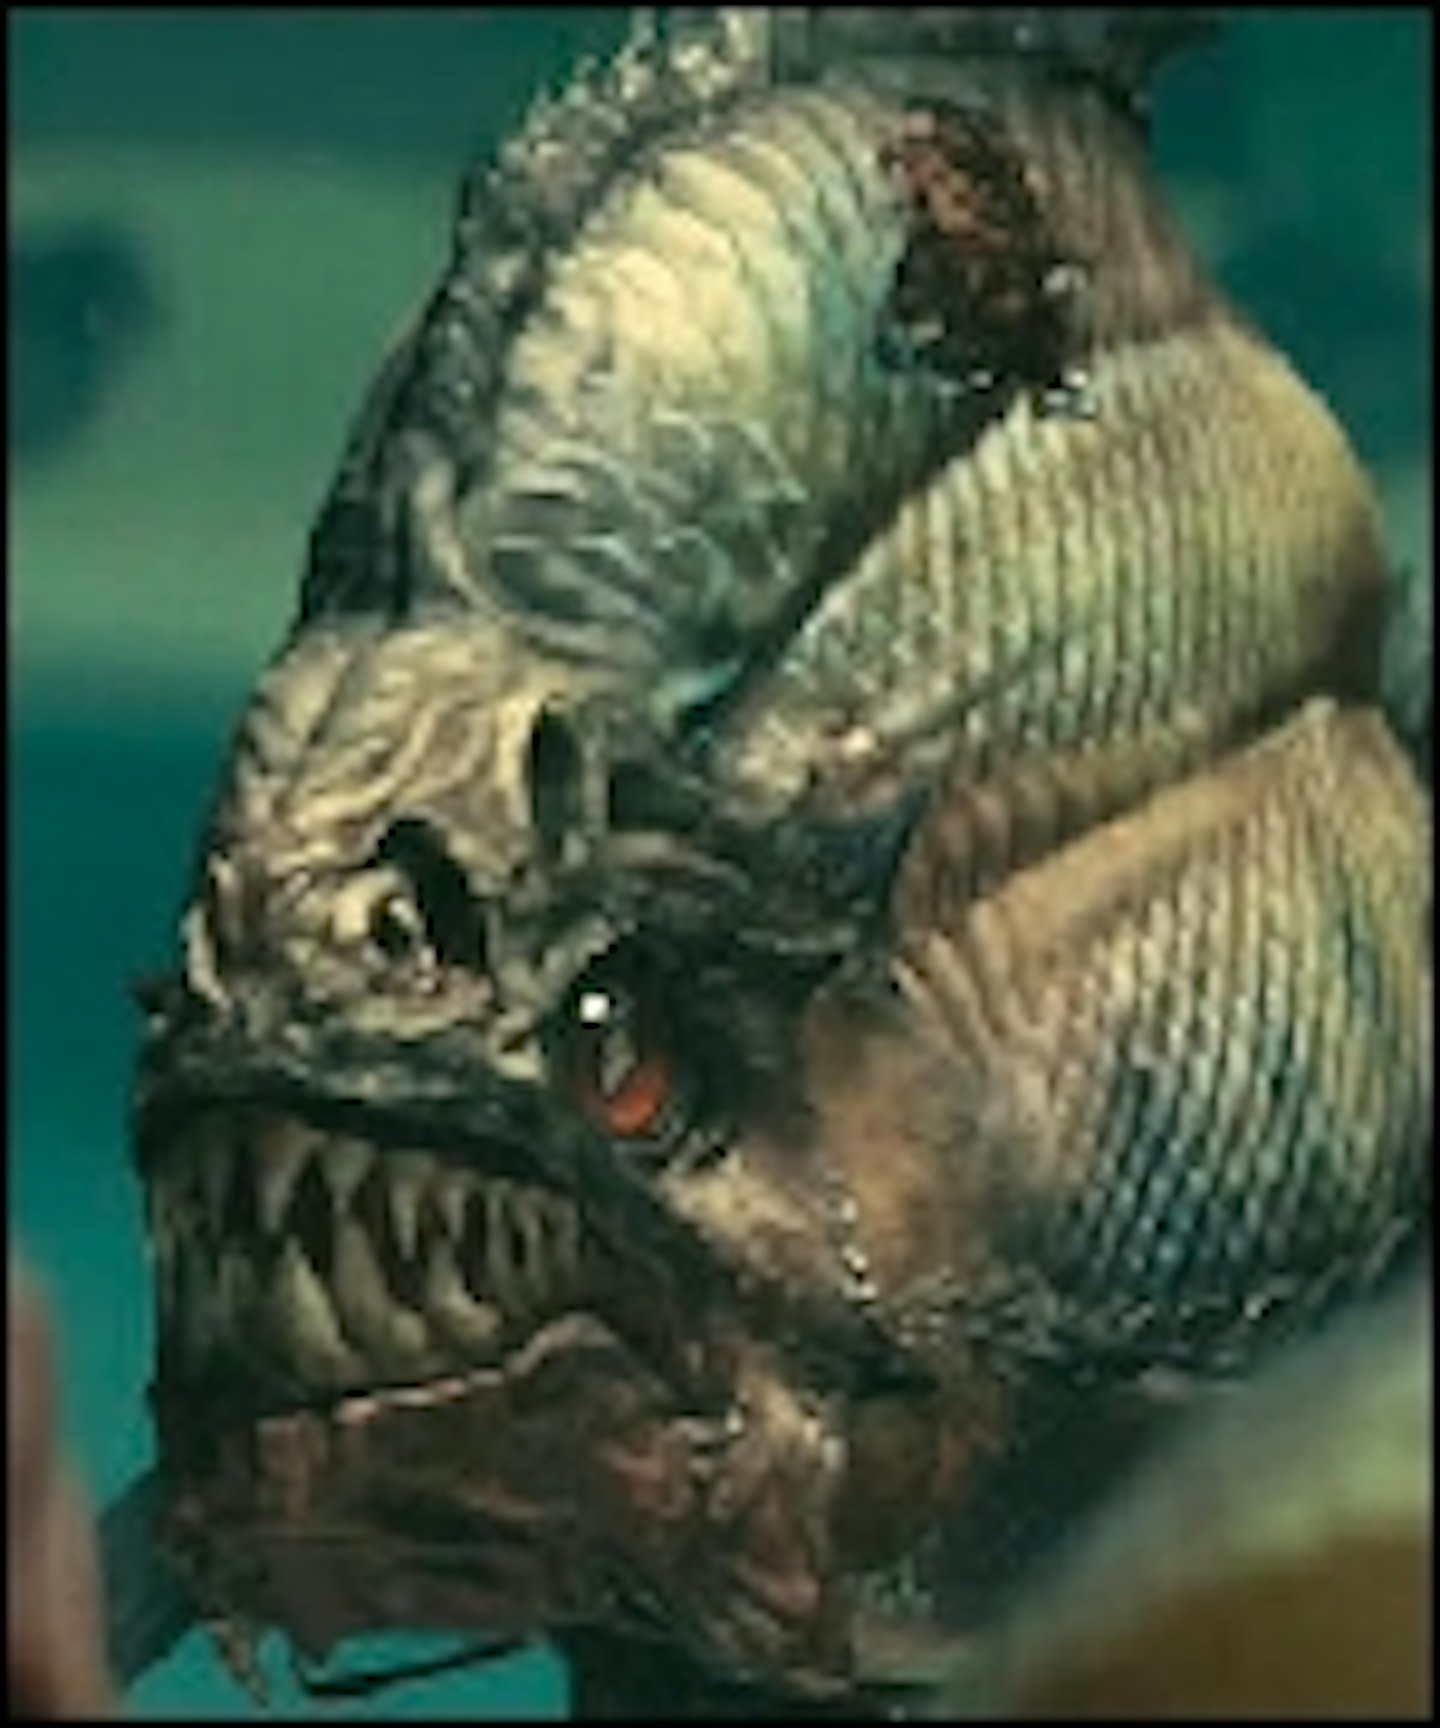 Mad New Piranha 3D Trailer Swims In